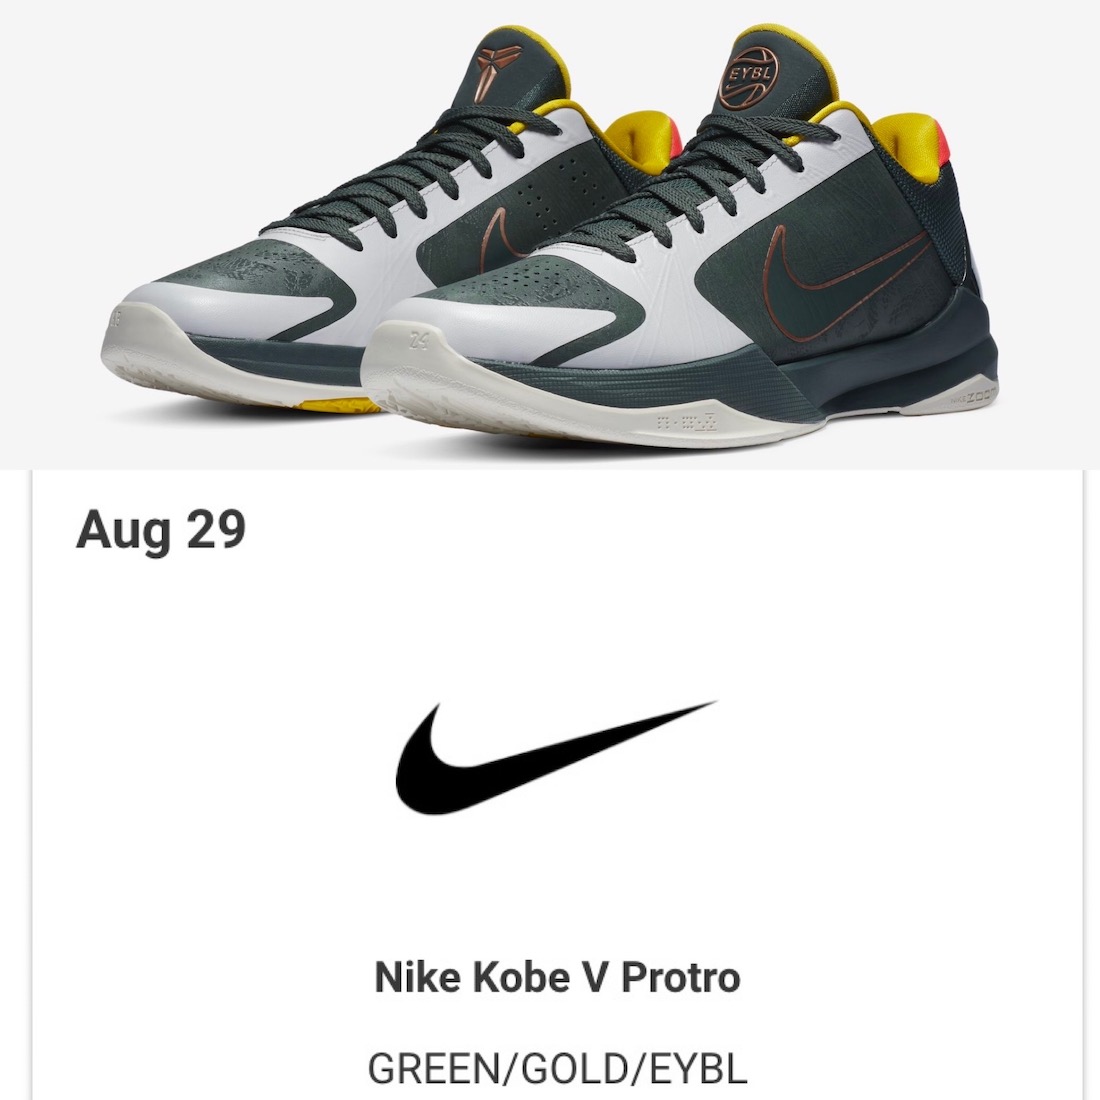 Nike Kobe 5 Protro EYBL Forest Green CD4991-300 Release Date Price